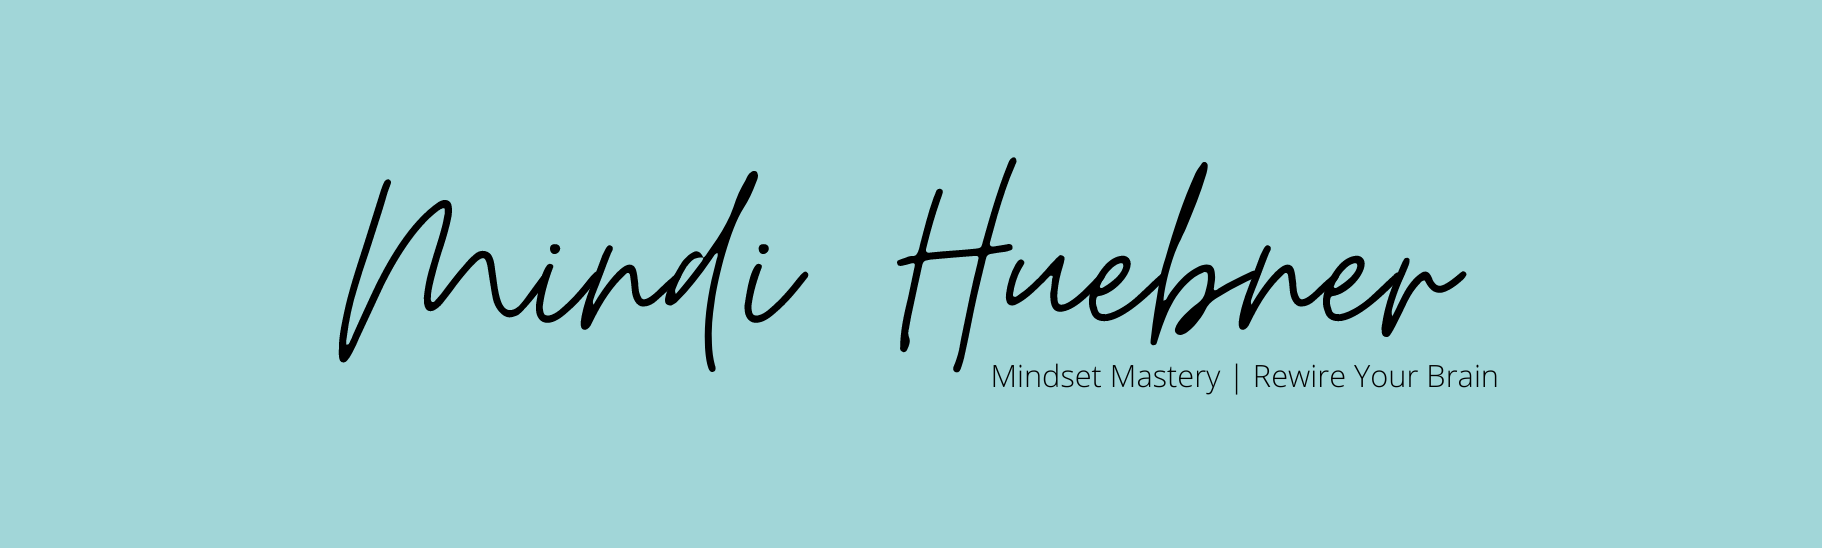 Mindi Huebner Mindset Mastery Coach Rewire Your Brain and Unlock your magic